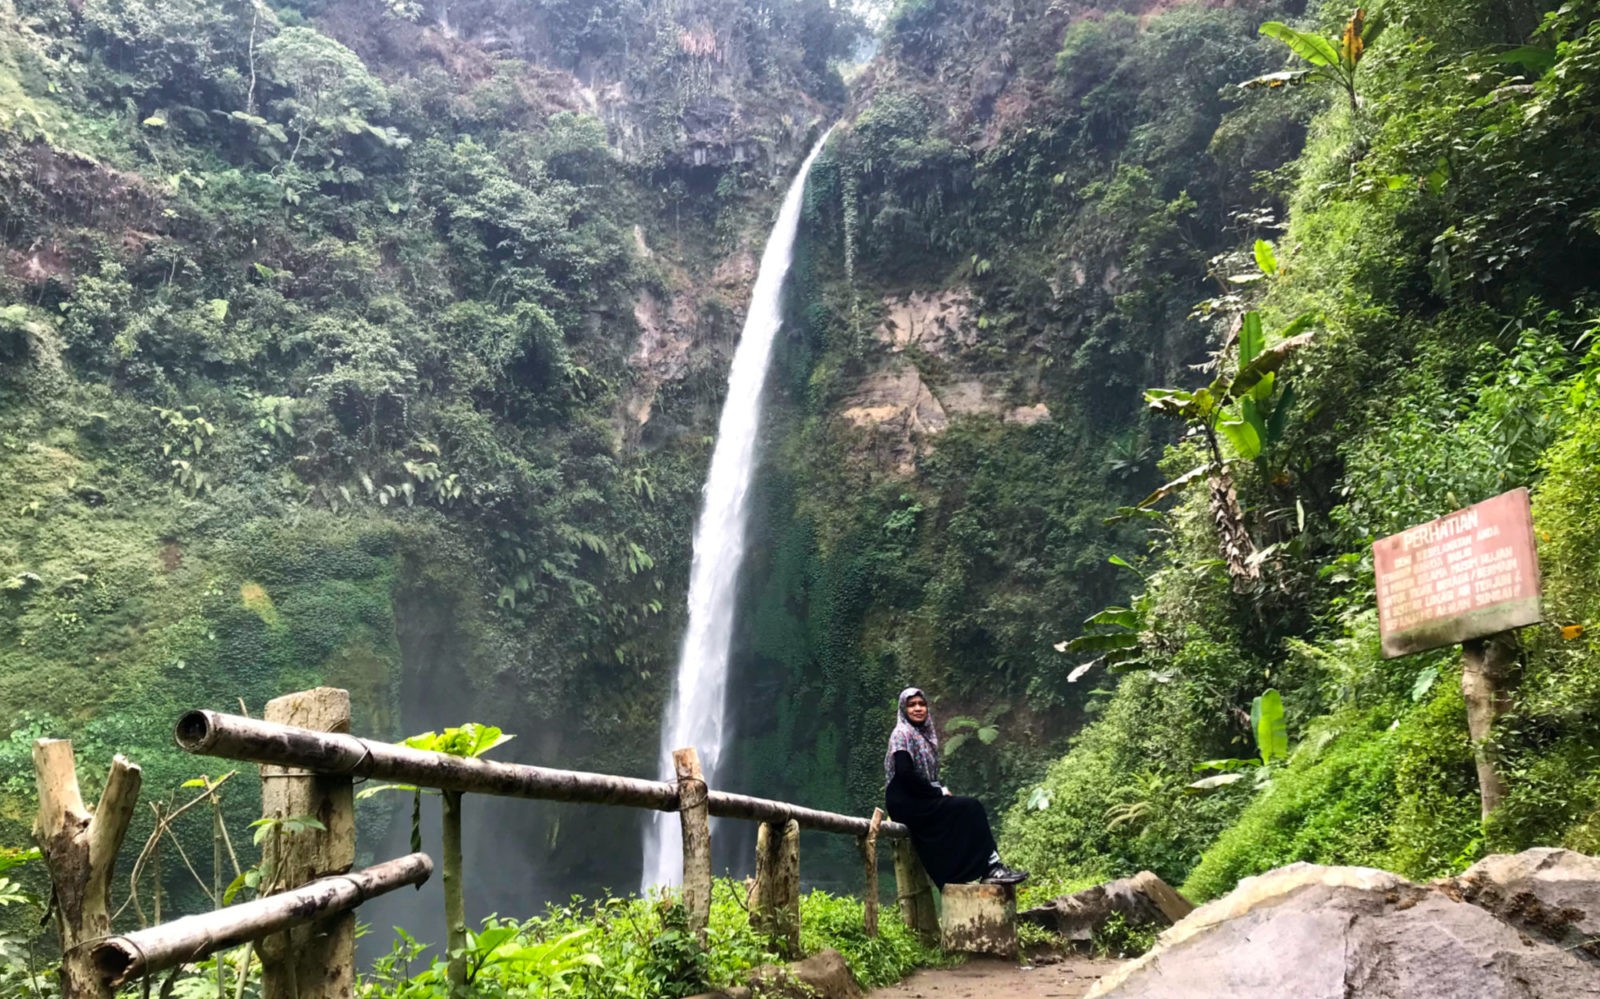 Coban pelangi waterfall talun indonesia rainbow place beautiful locations adventure amazing bridge